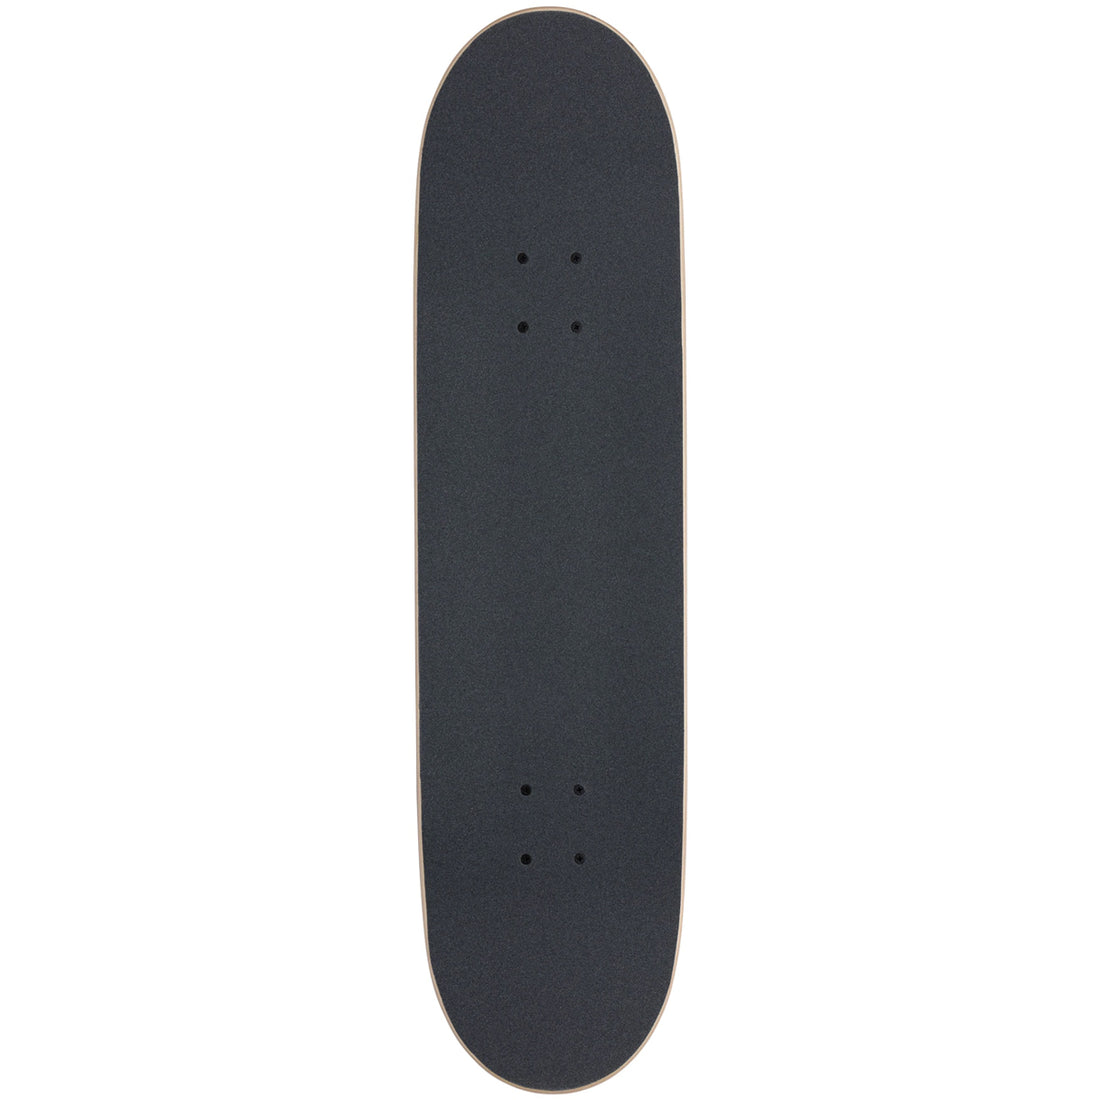 Santa Cruz x Stranger Things Classic Dot Large 8.25" Skateboard Complete